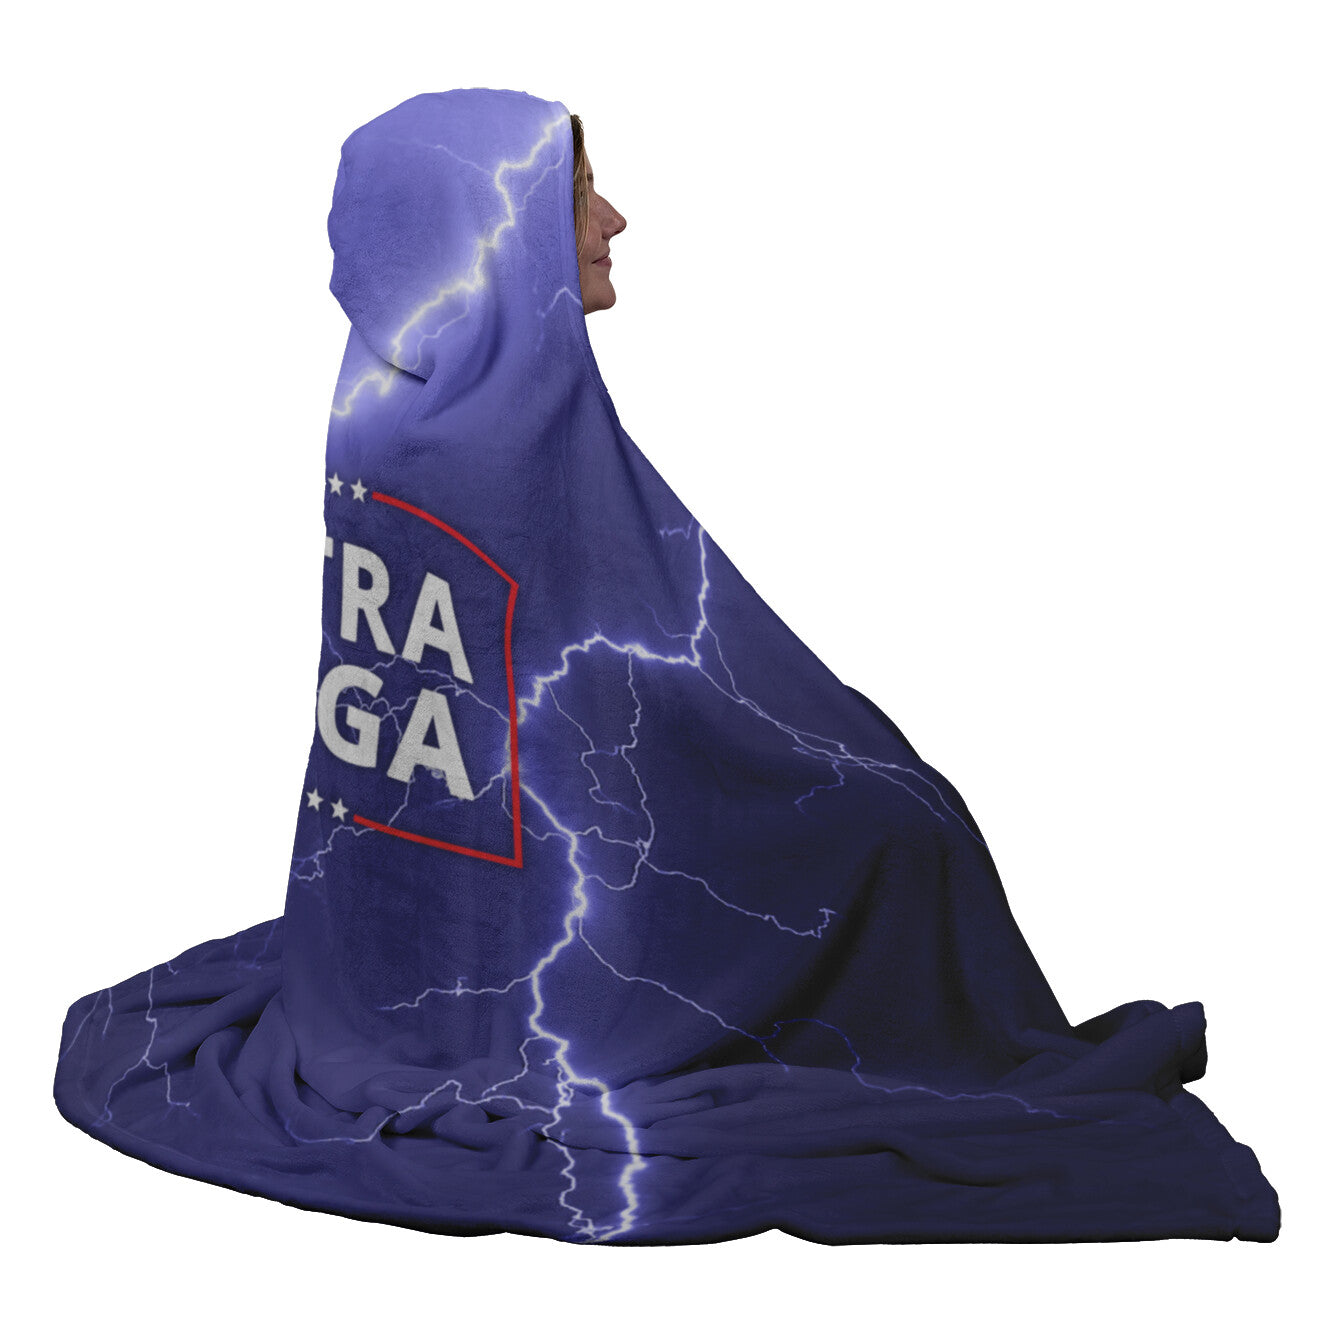 Ultra Maga Hooded Blanket - Rise of The New Media